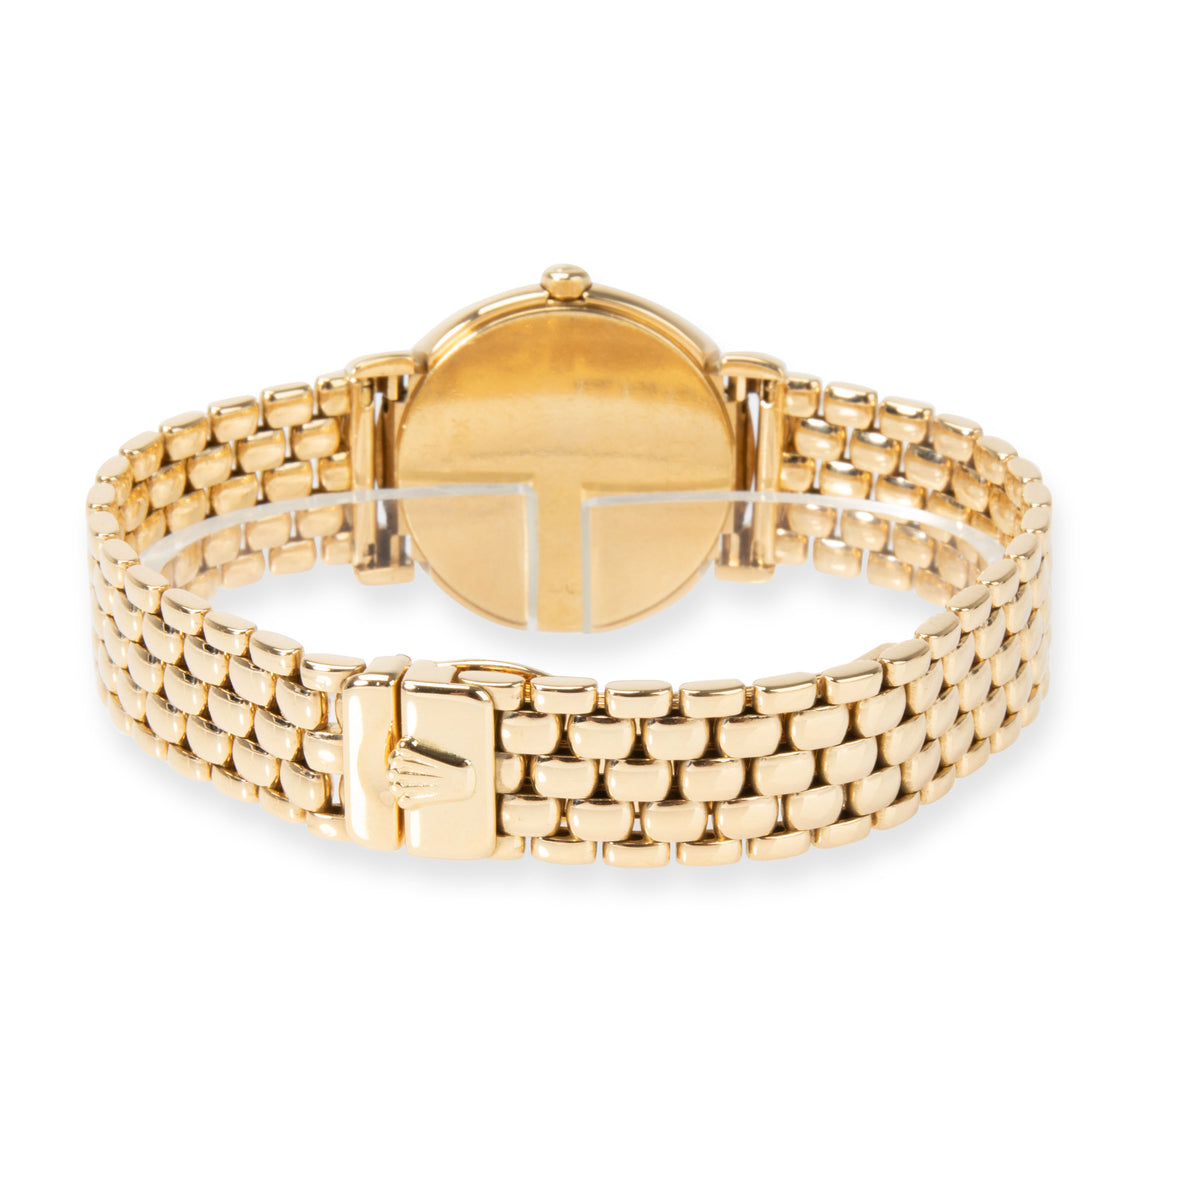 Rolex Cellini 6621/8 Women's Watch in 18kt Yellow Gold